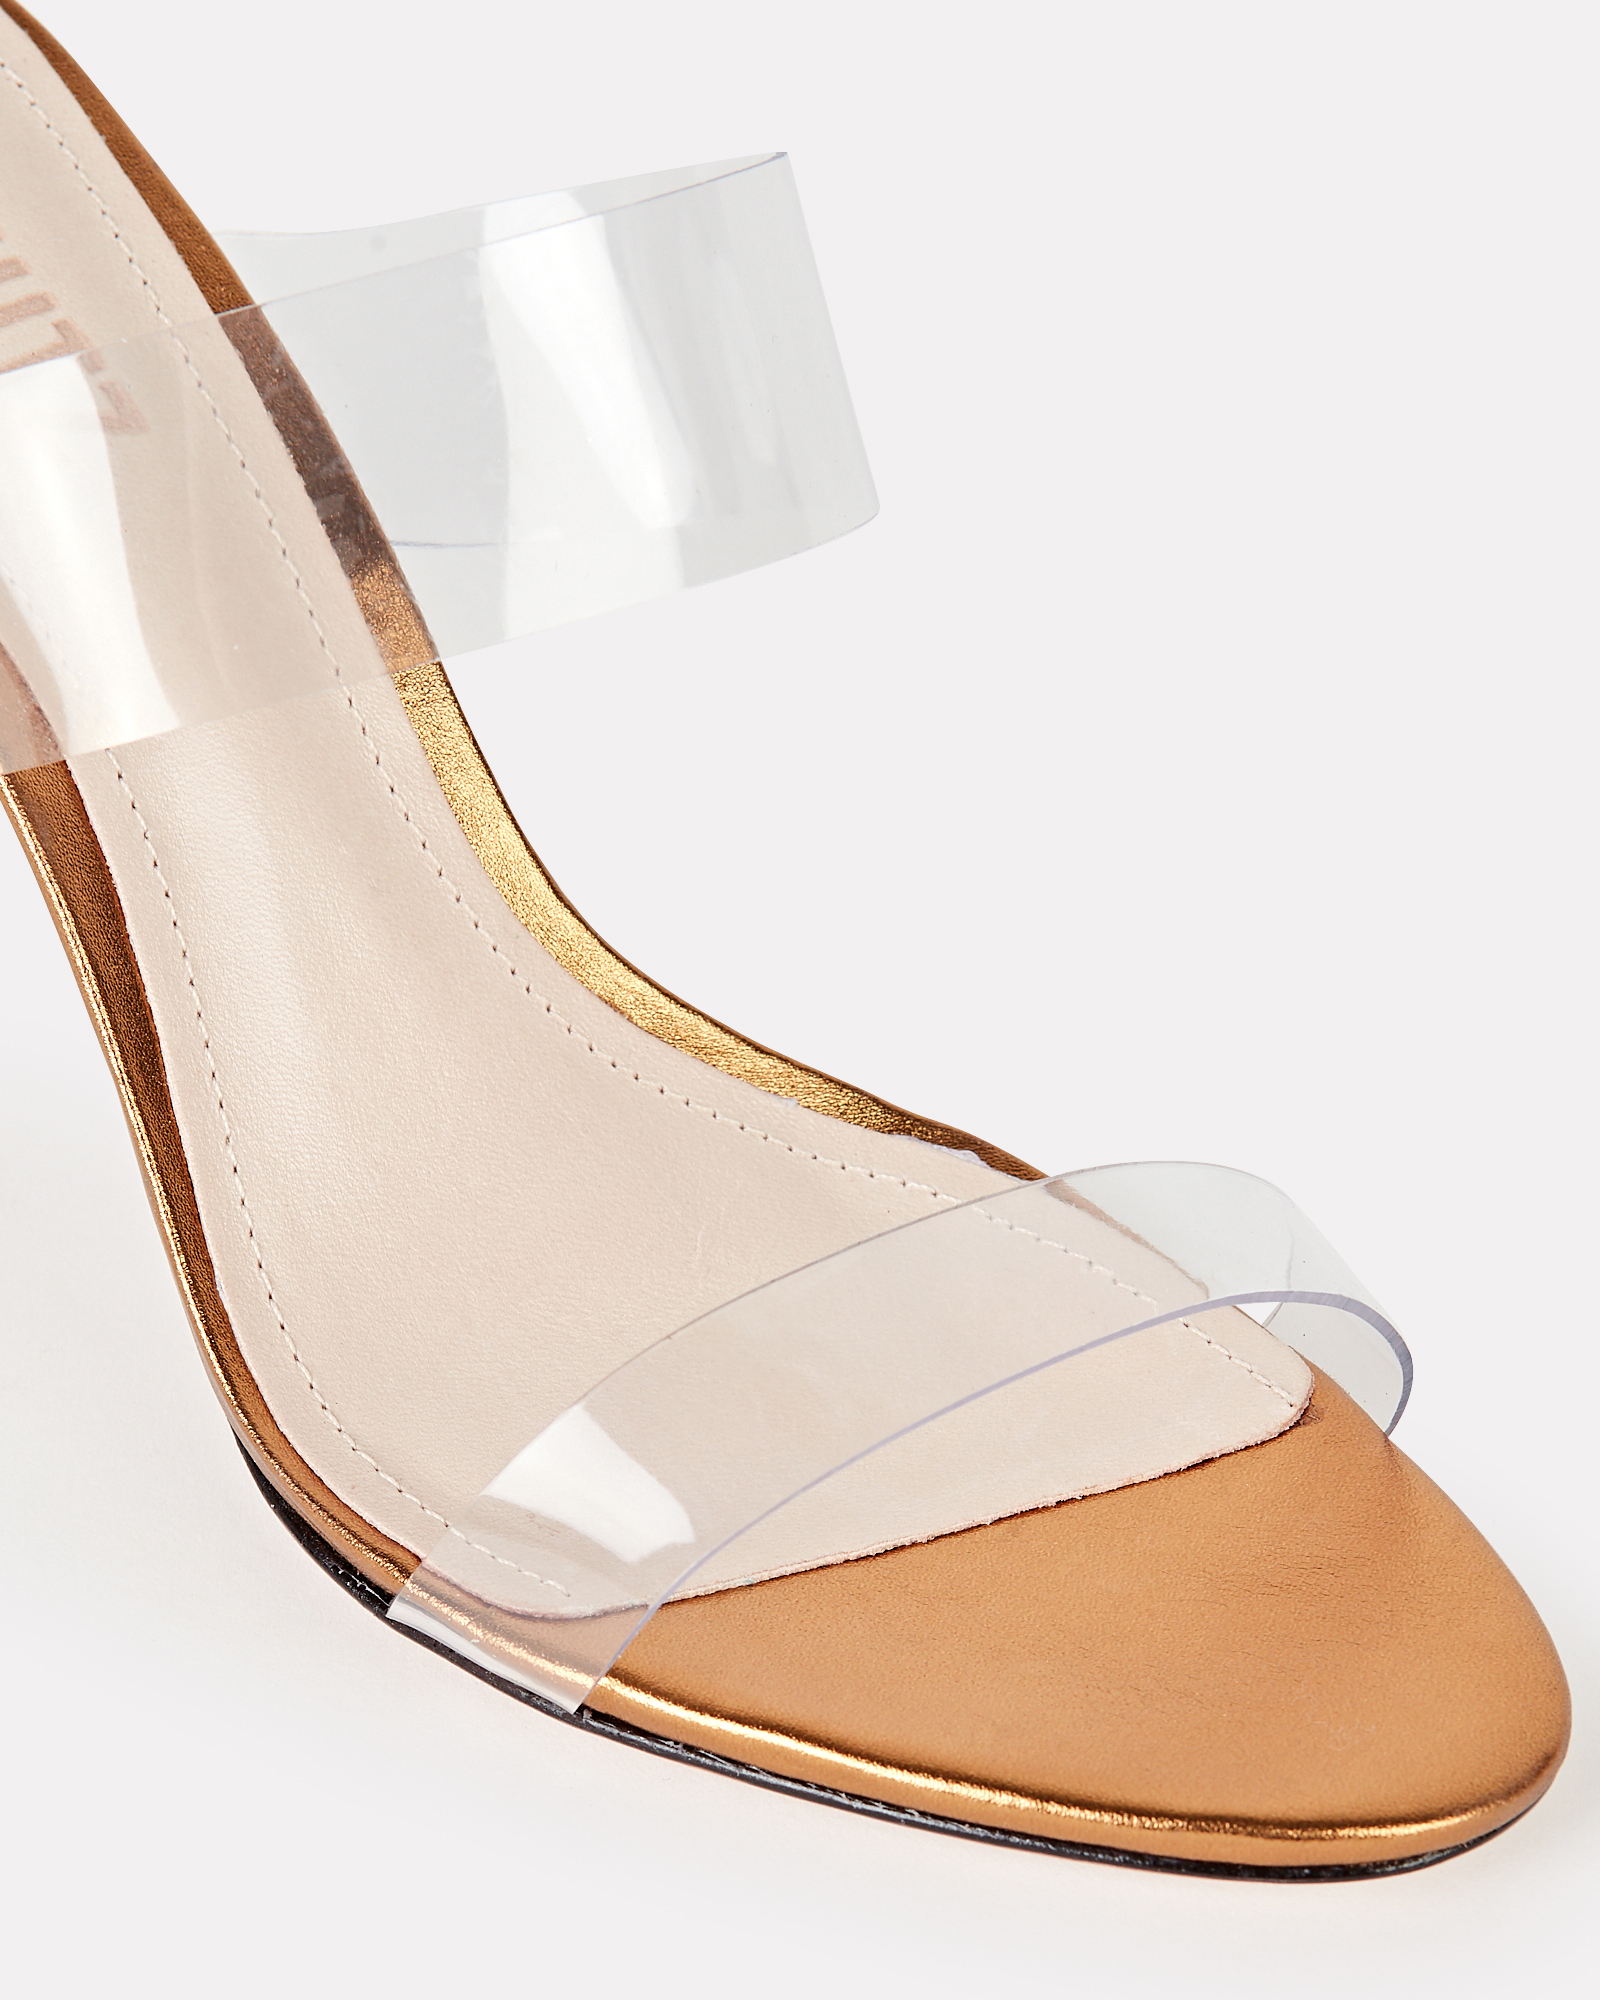 Schutz Ariella PVC Strap Sandals | INTERMIX®